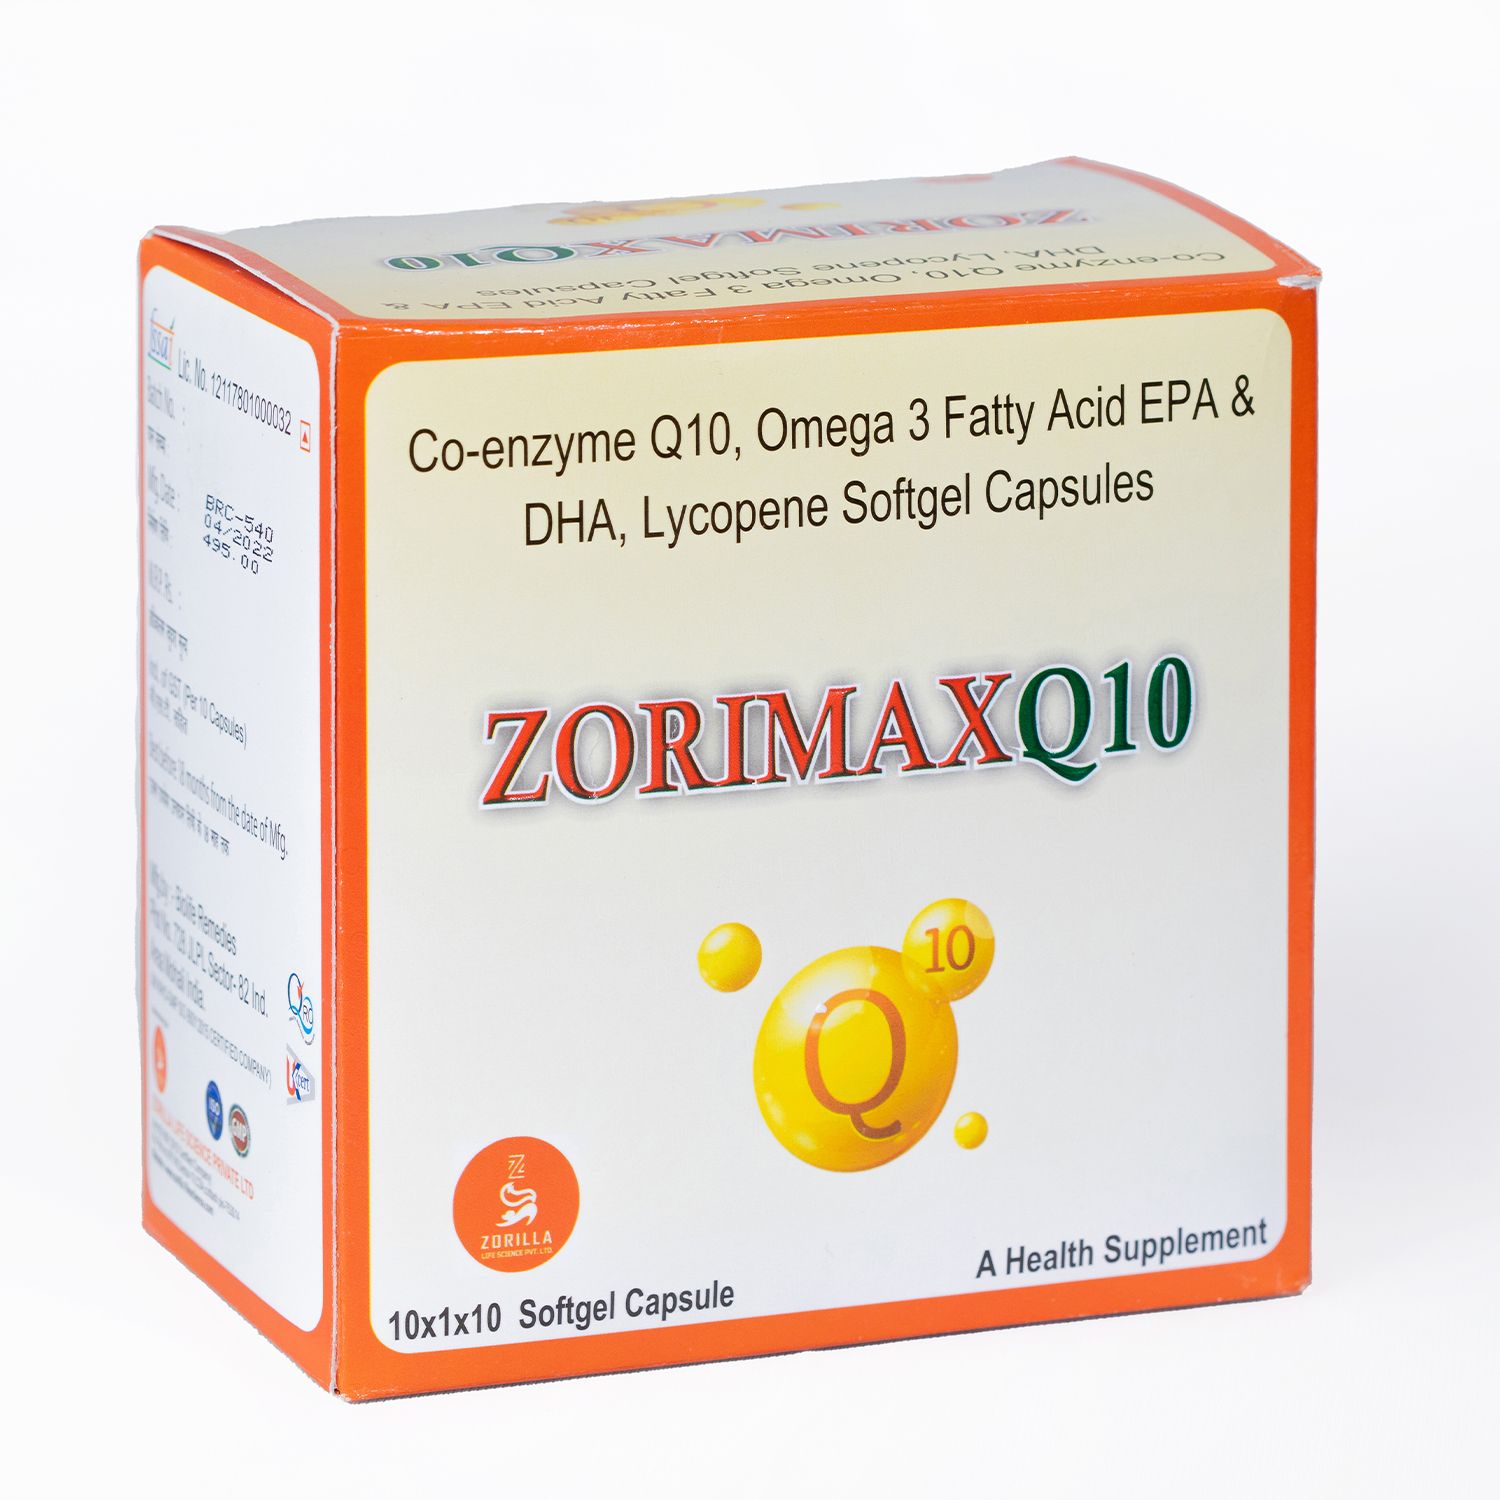 Buy Zorimax Q10 Tablets at Best Price Online